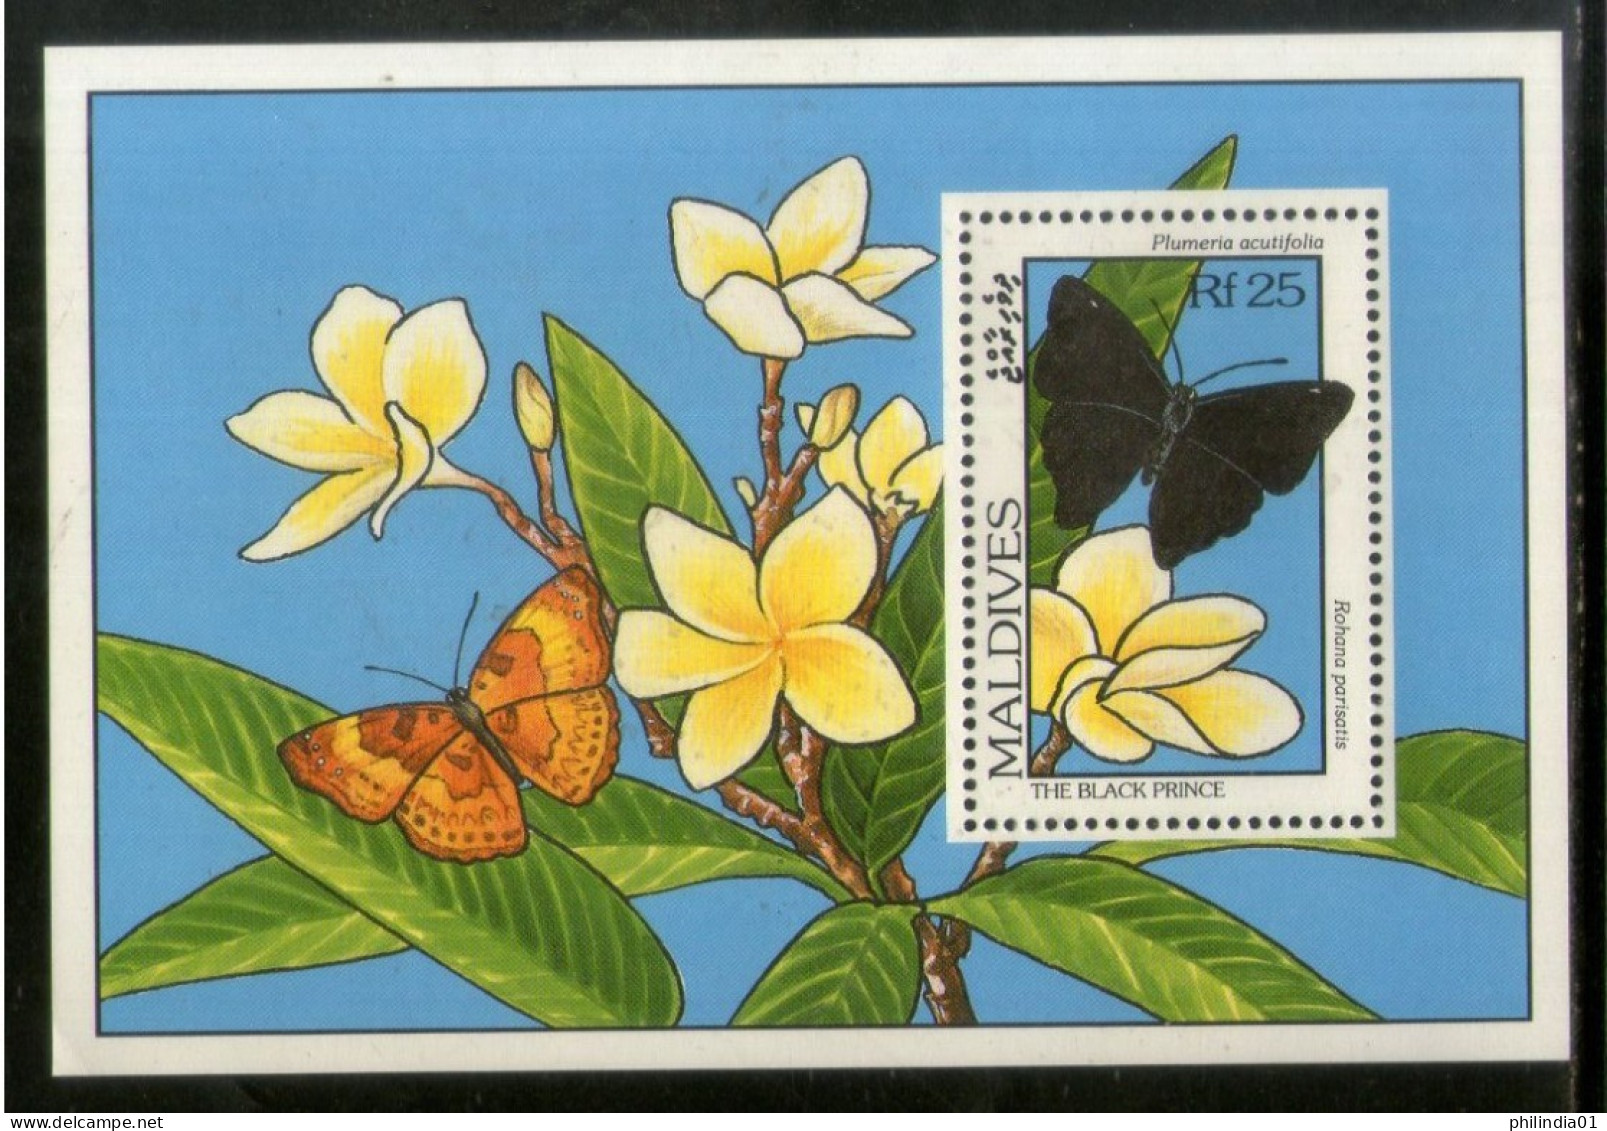 Maldives 1993 Black Prince Butterflies & Flowers Moth Insect Sc 1907 M/s MNH # 5293 - Butterflies